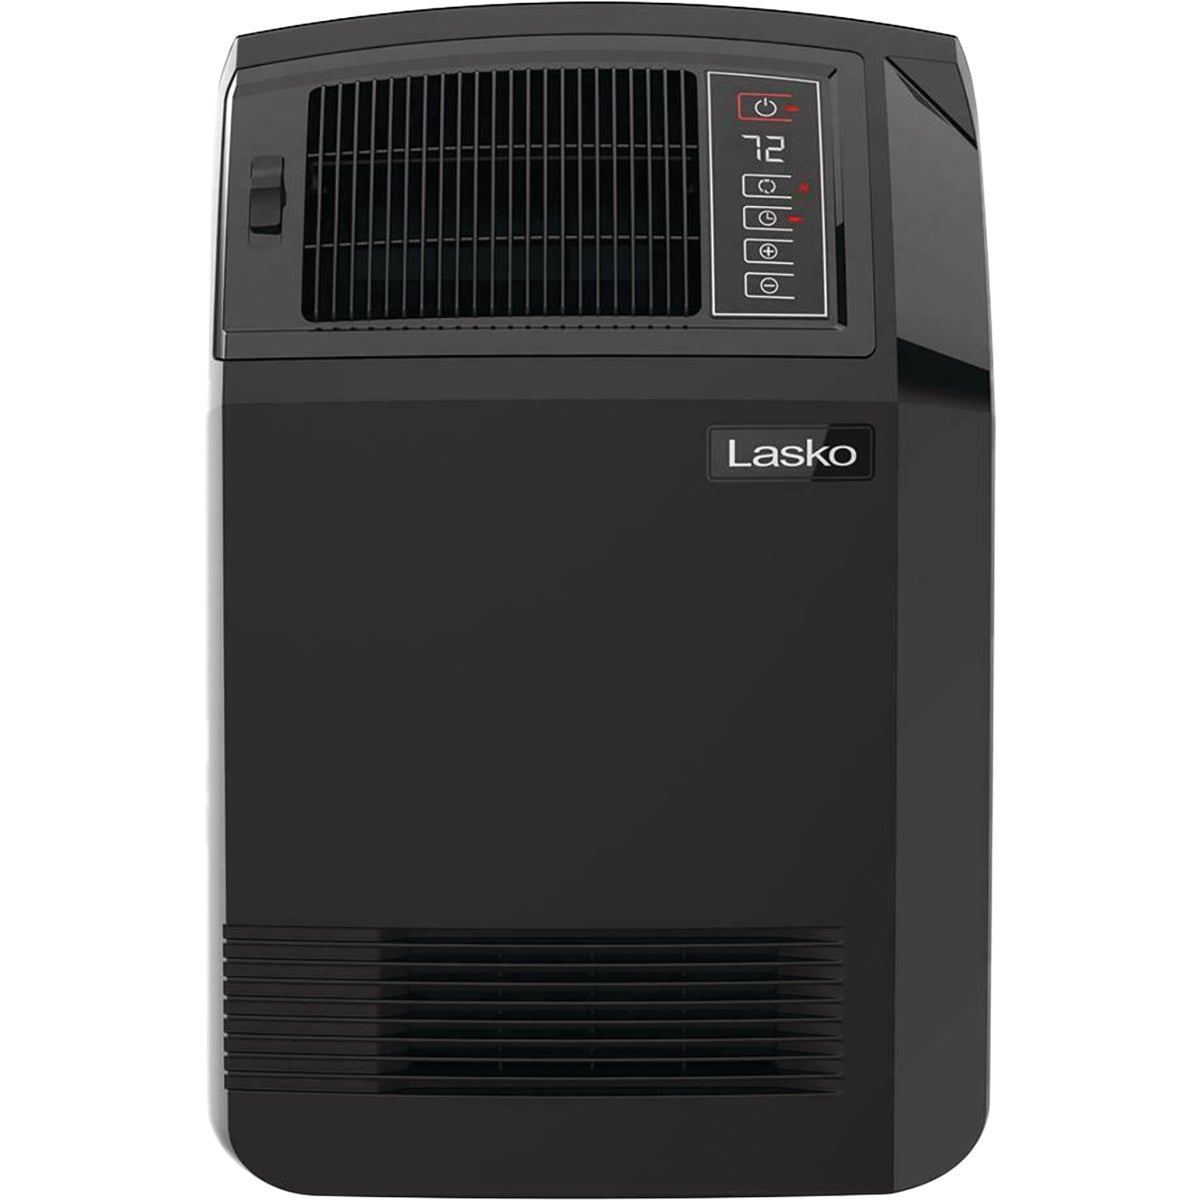 Lasko 1500W 120V Cyclonic Ceramic Space Heater